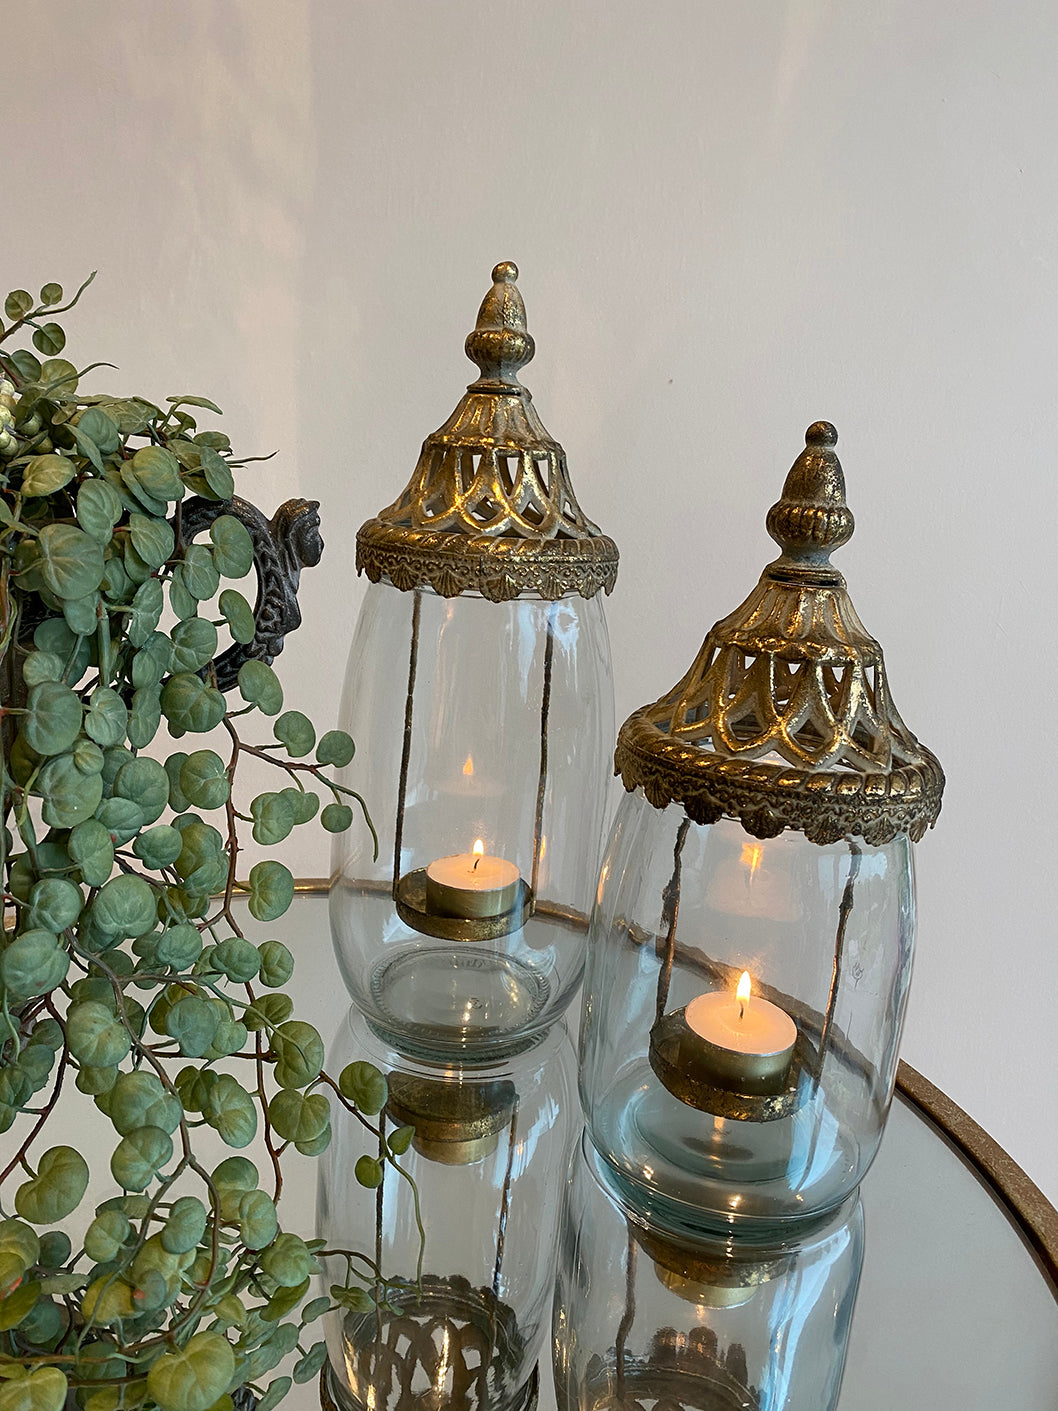 Metal lantern, antique look